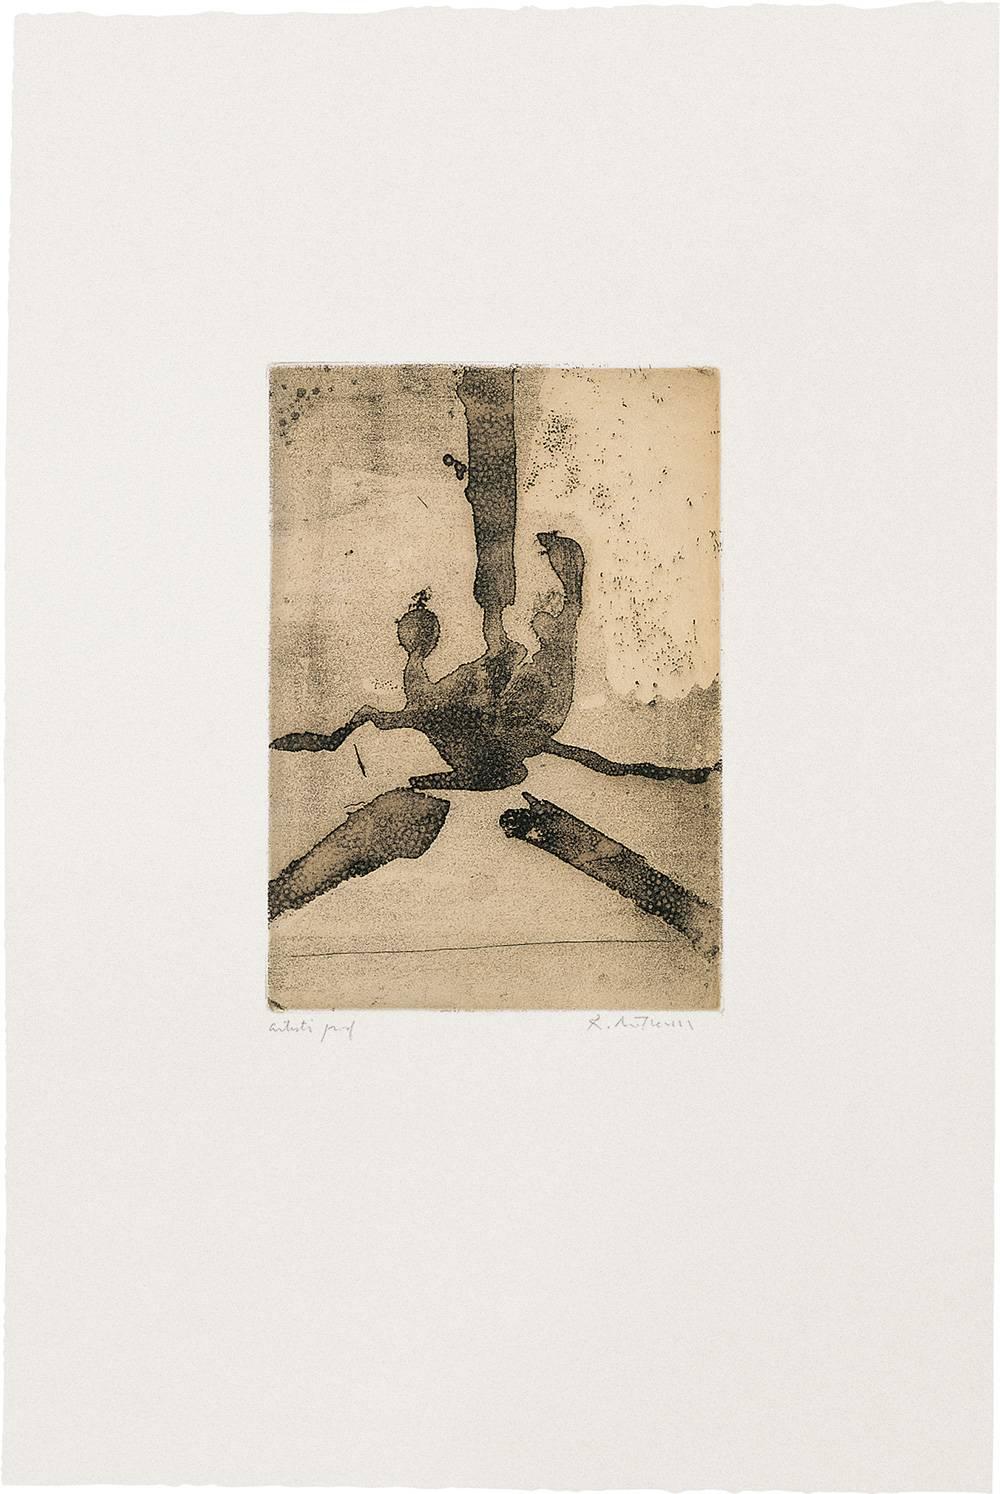 Abstract Print Robert Motherwell - Paroles peintes III : Sans titre